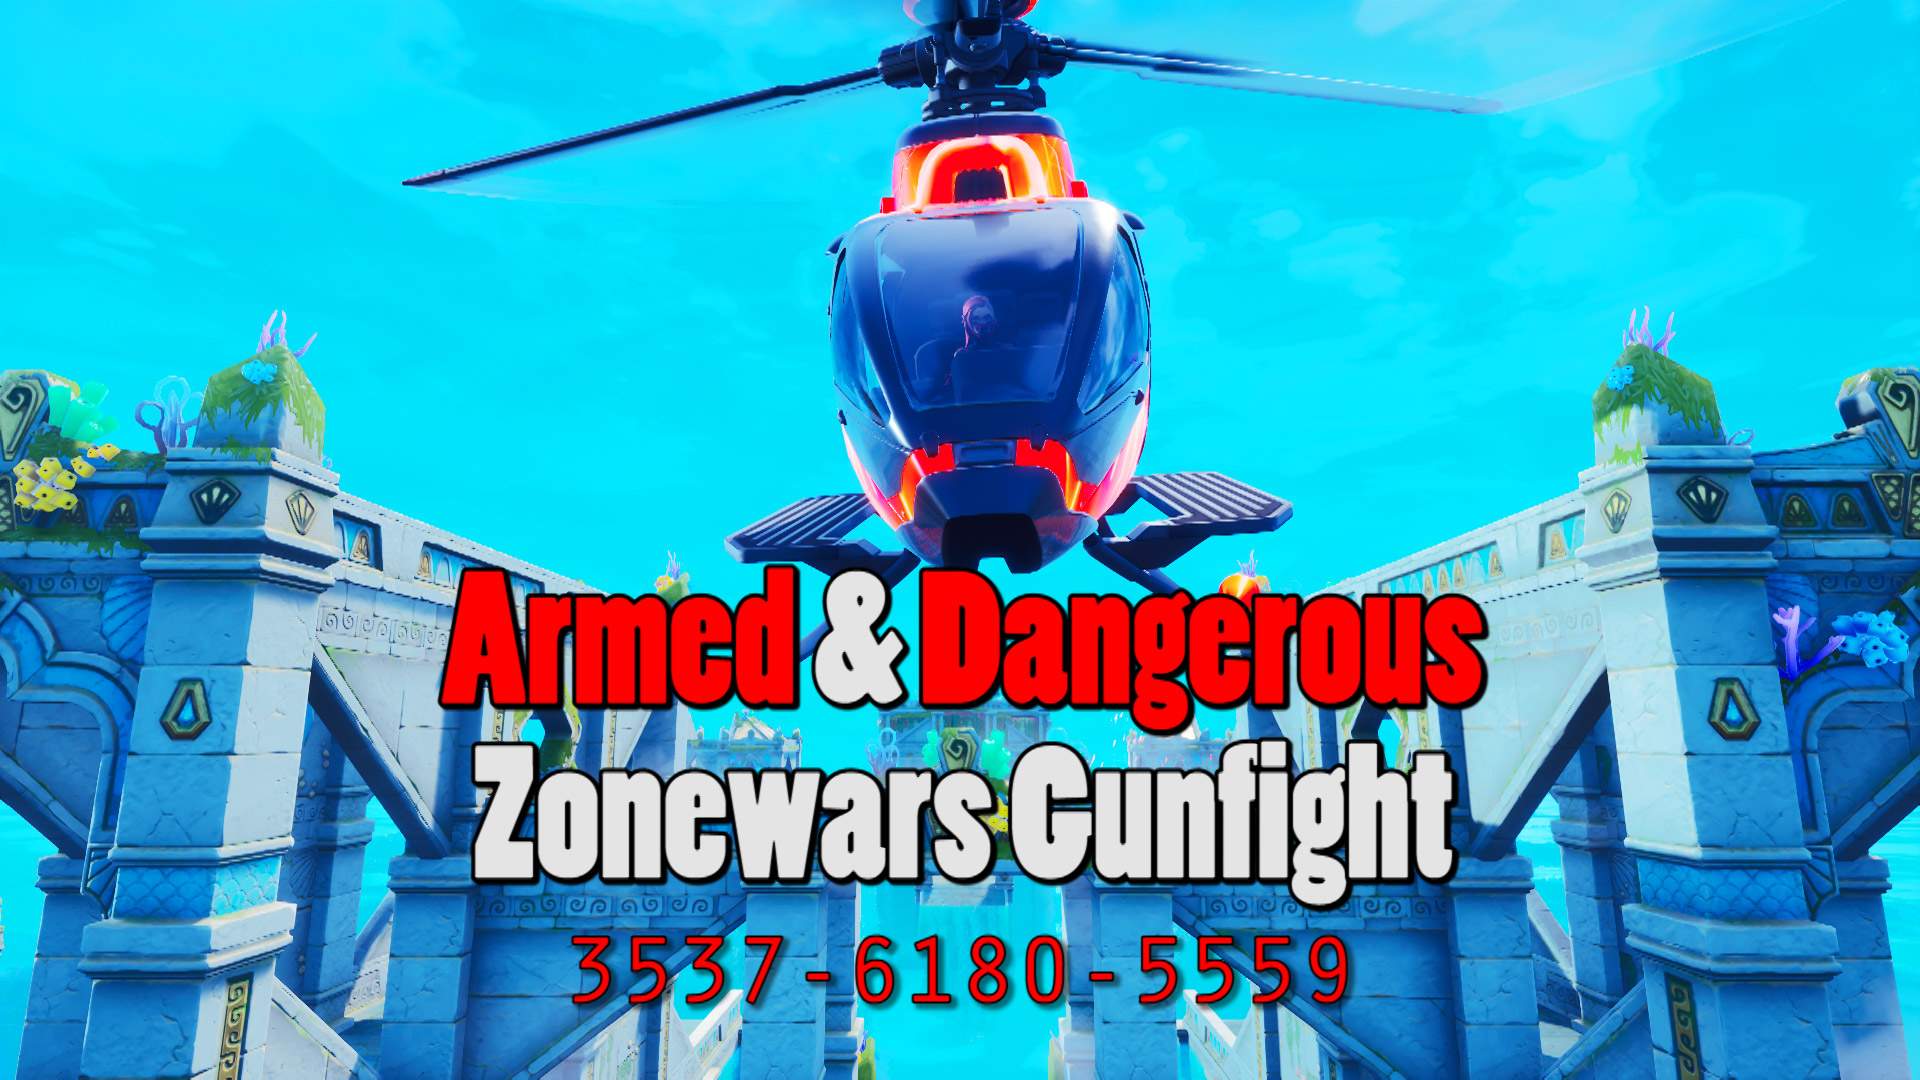 ARMED & DANGEROUS | ZONEWARS GUNFIGHT